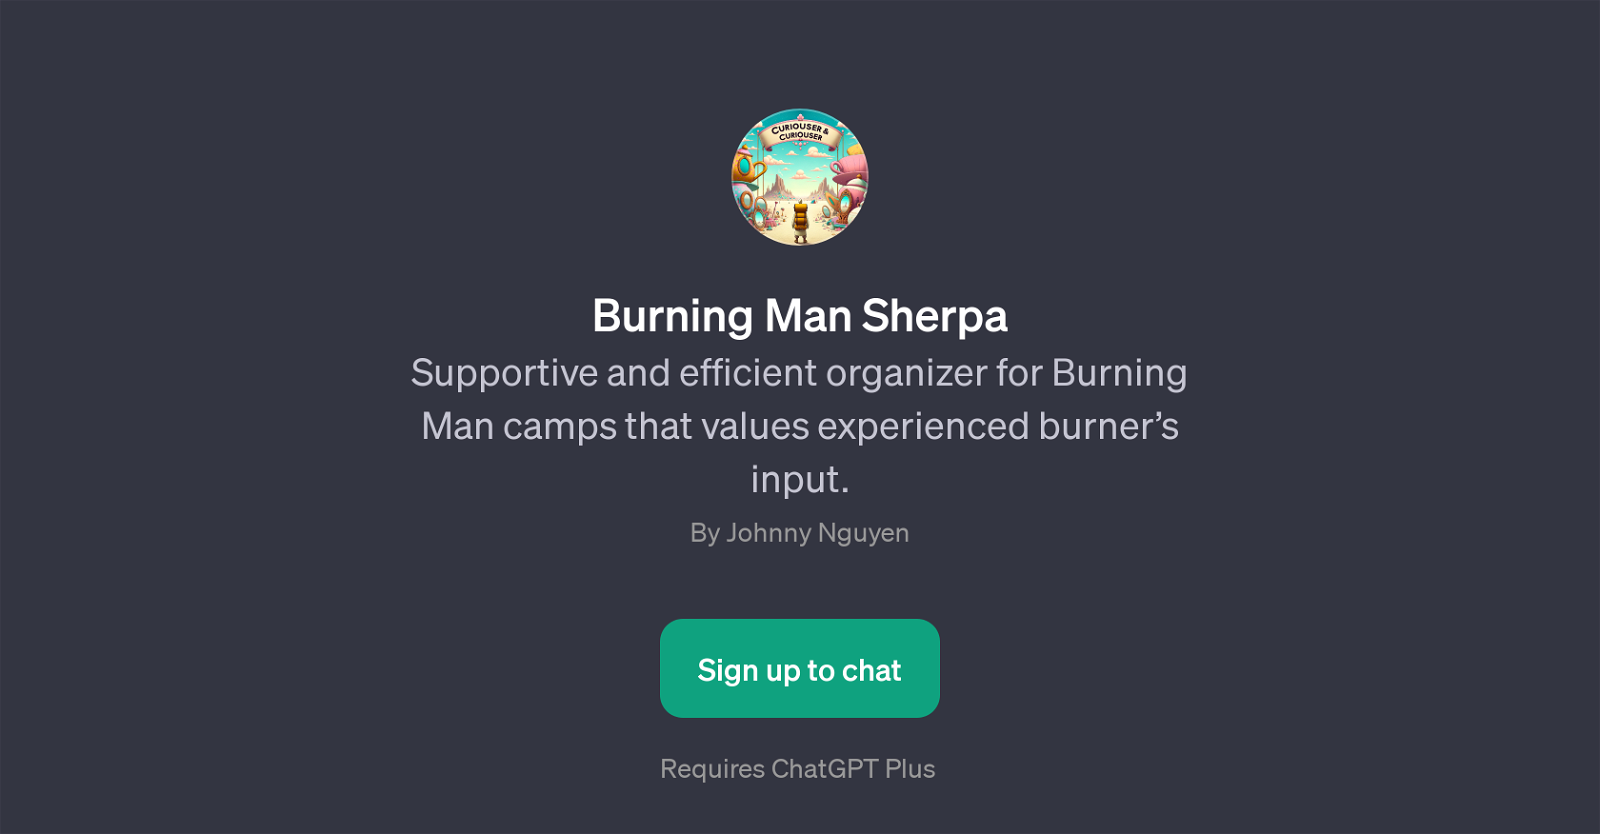 Burning Man Sherpa website